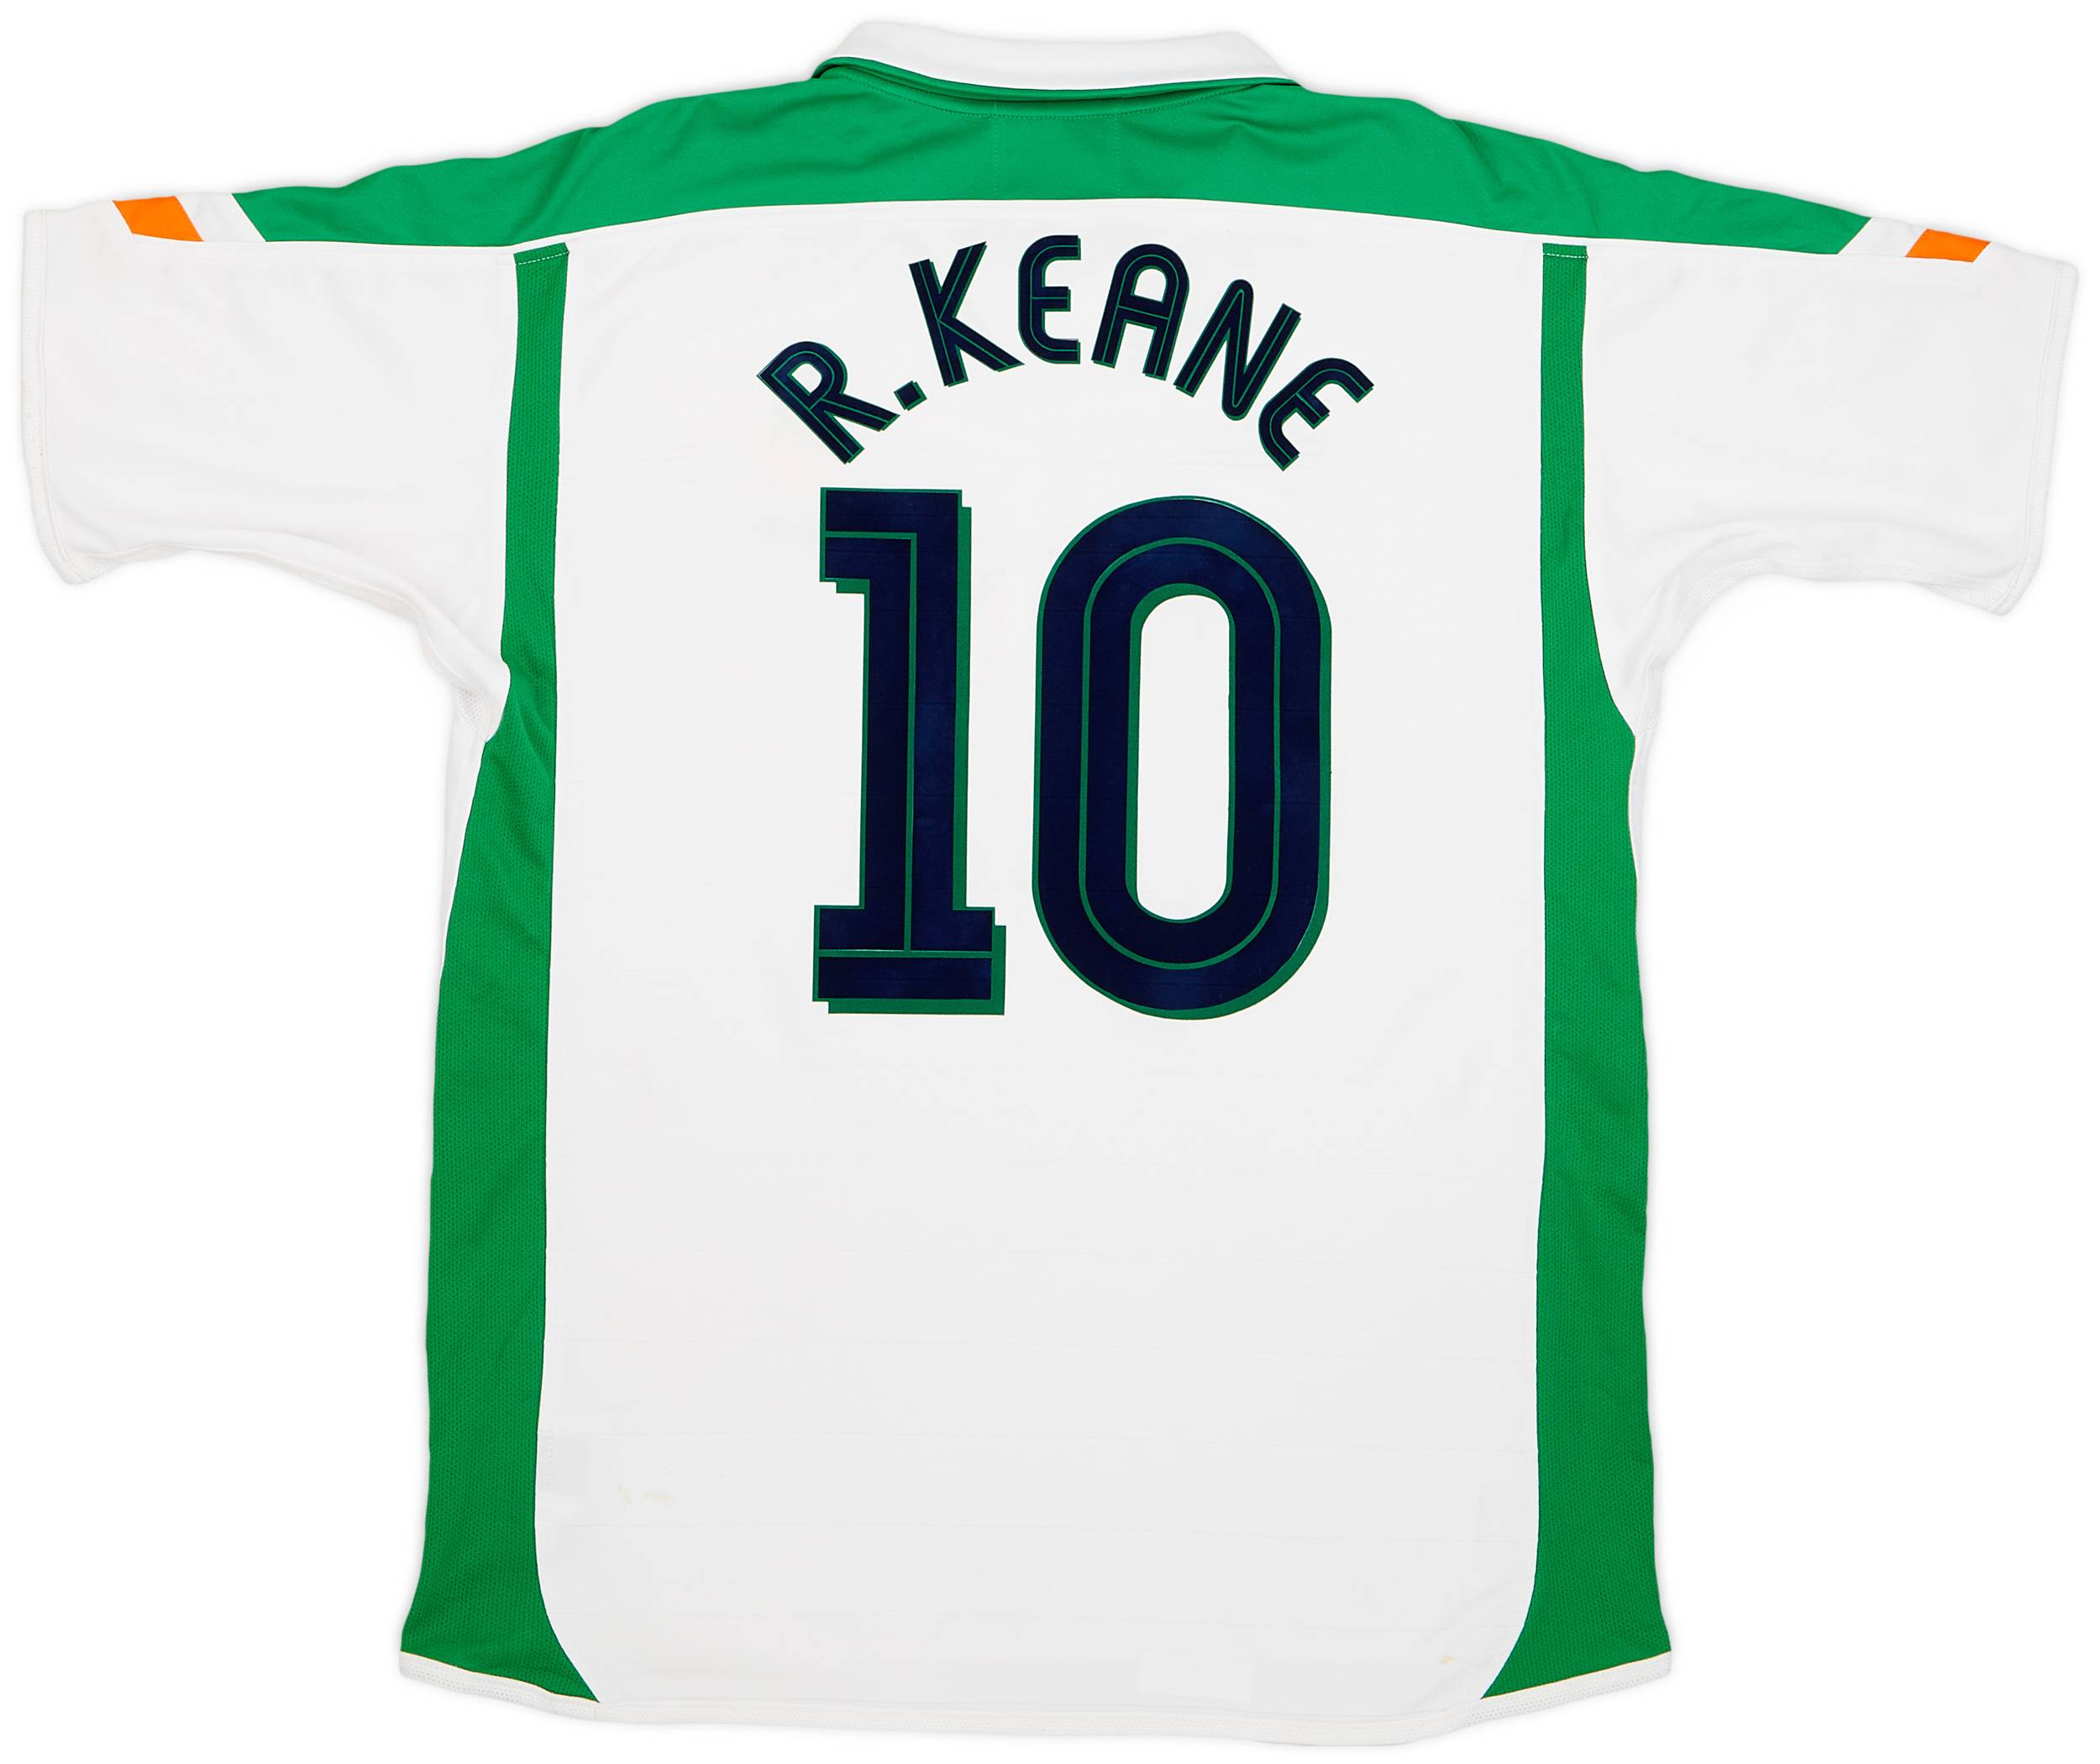 2003-05 Ireland Away Shirt R.Keane #10 - 8/10 - (XL)